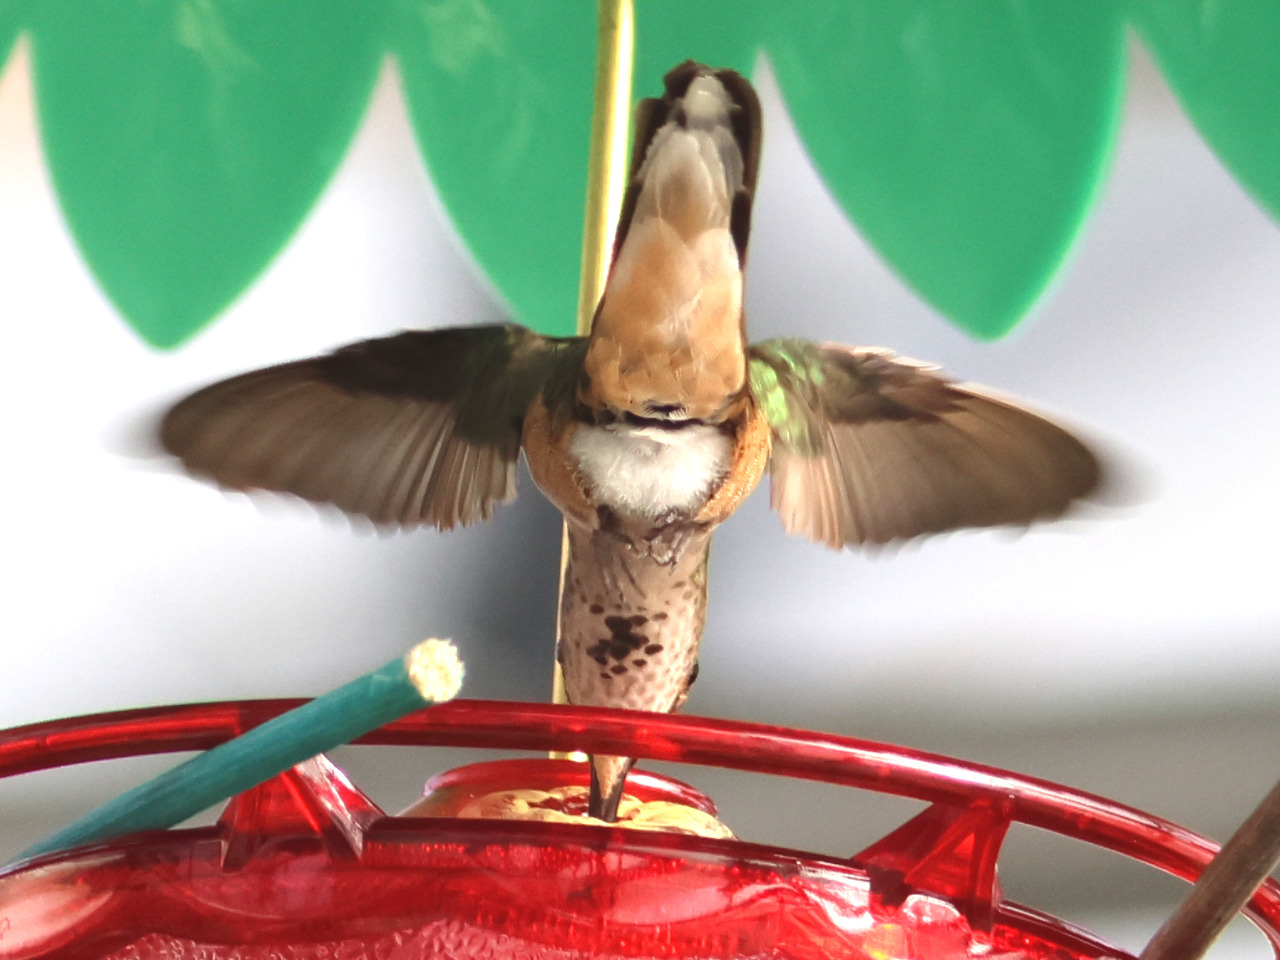 Columbus the Hummingbird bending over feeder